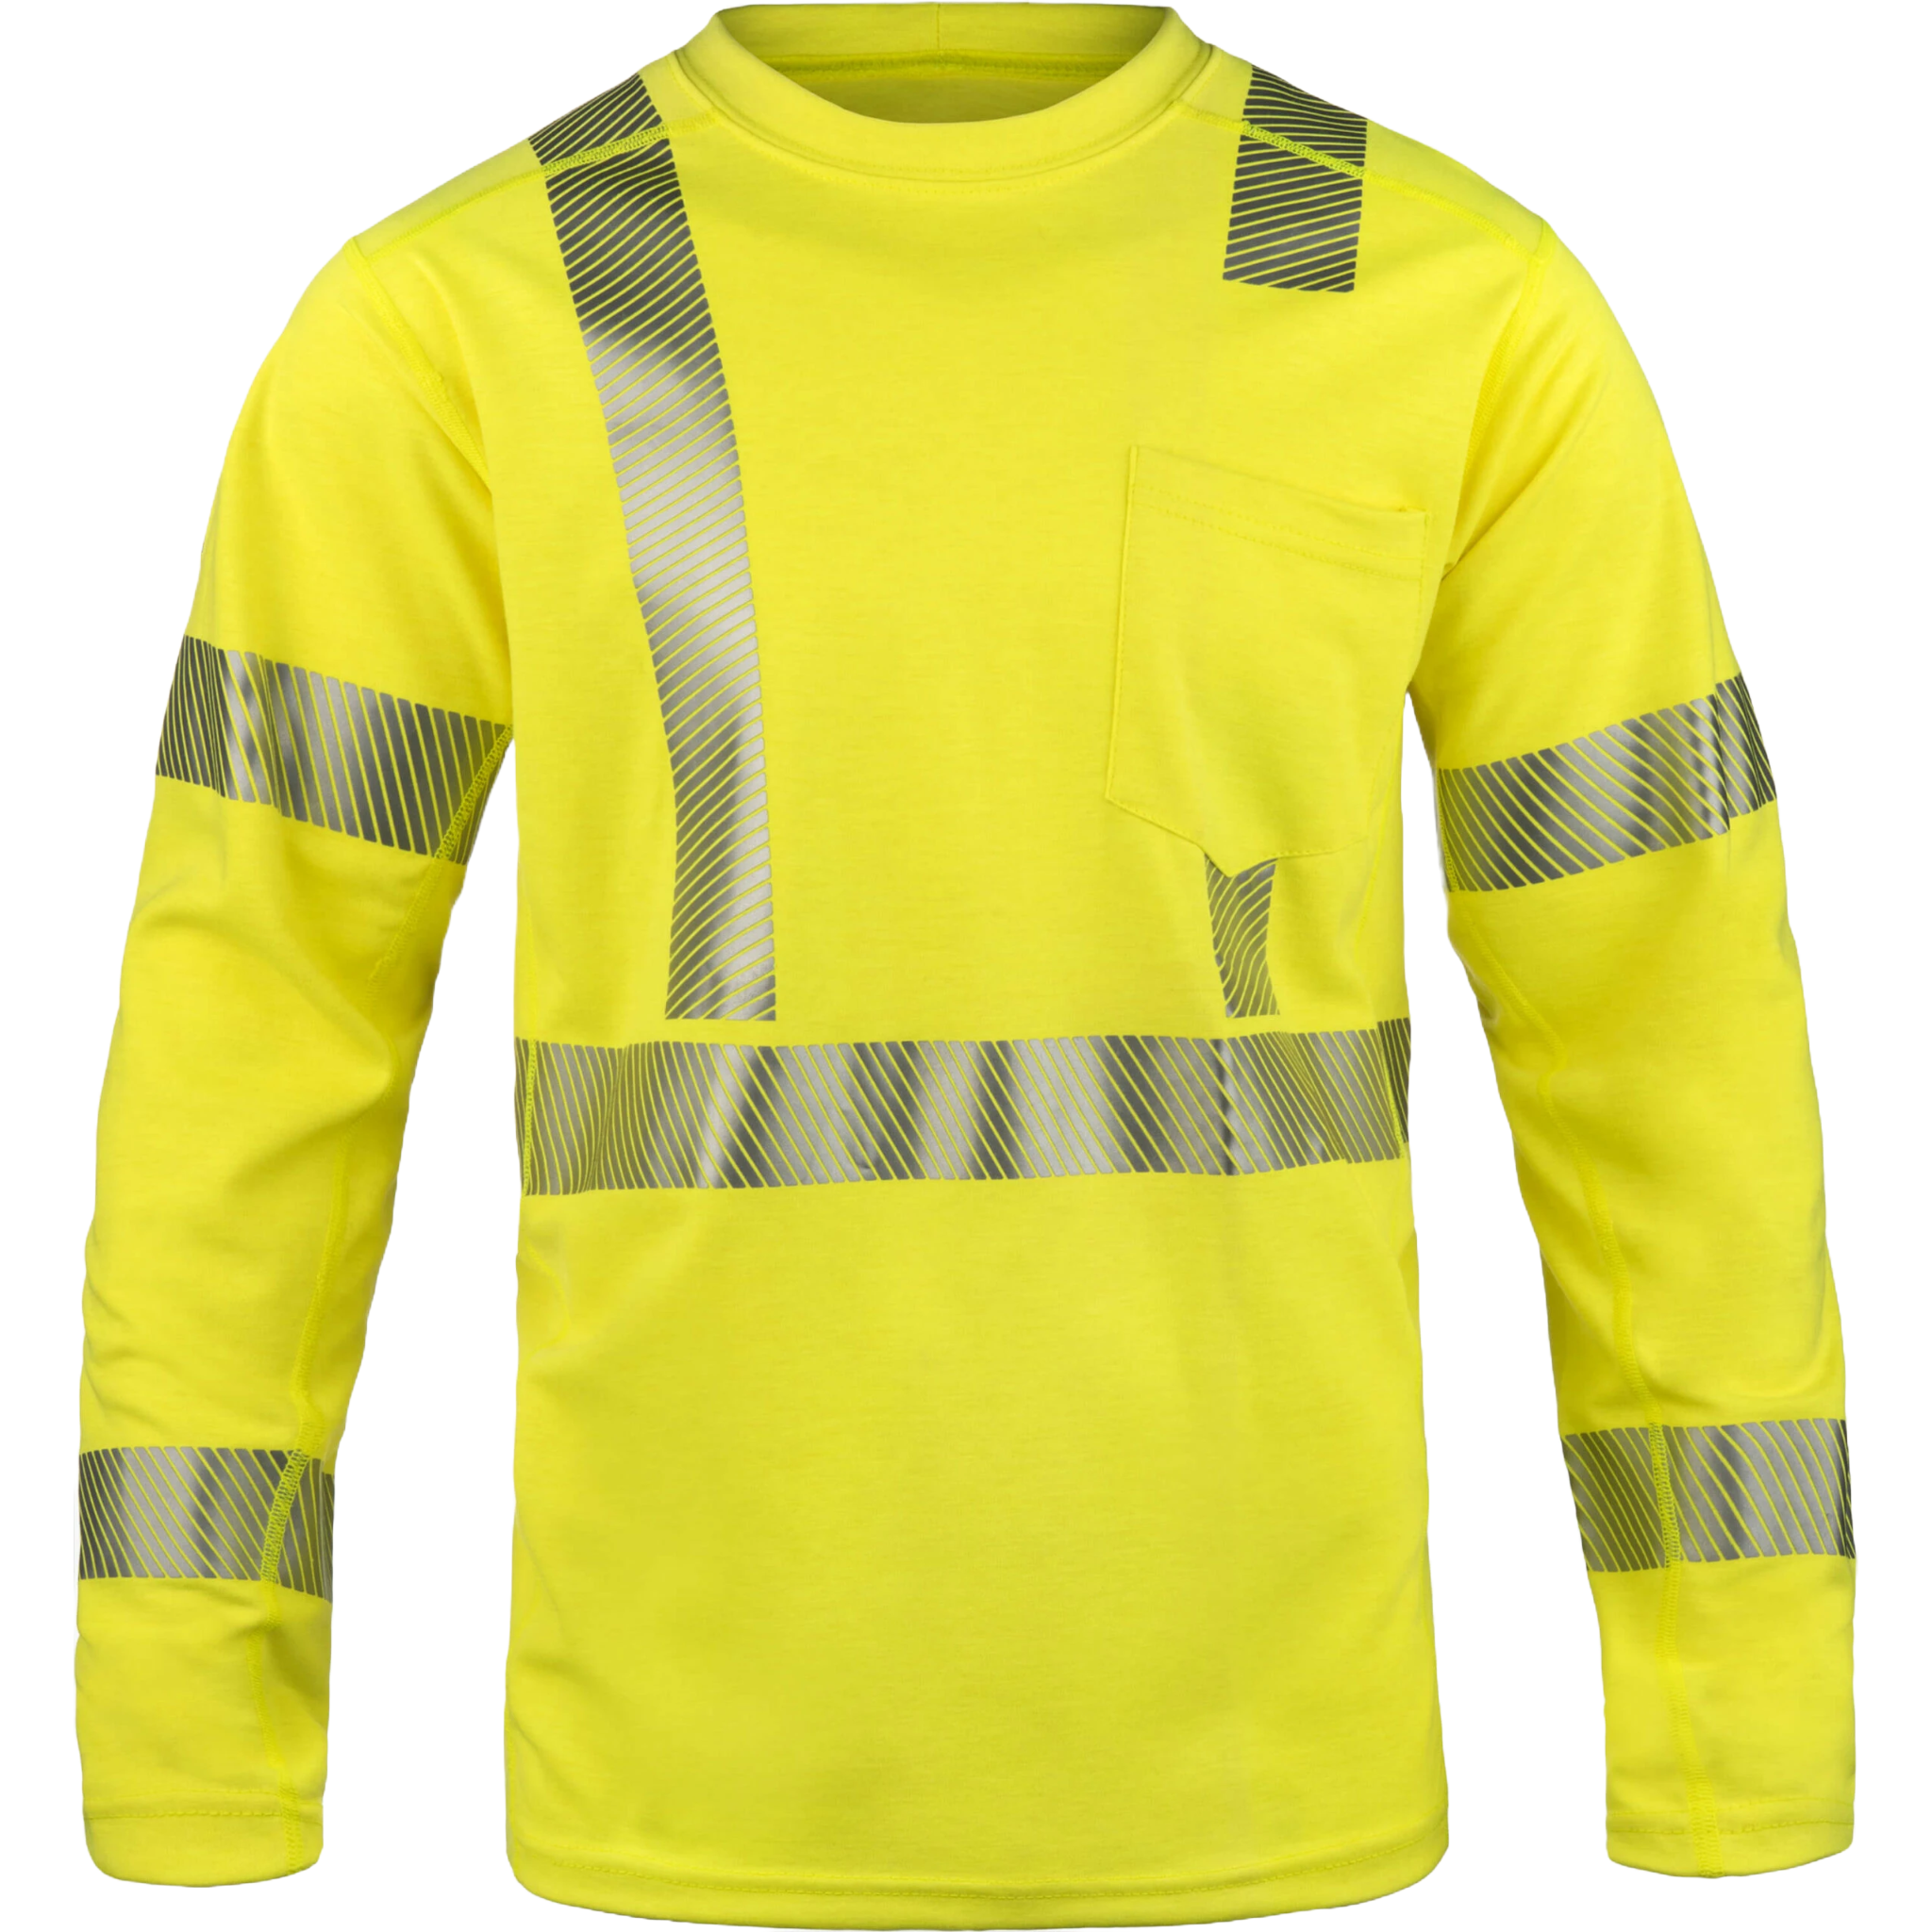 LAKELAND LSCAT29RT FR Knit Long Sleeve Crew Shirt, Hi-Vis Yellow, 1 Each